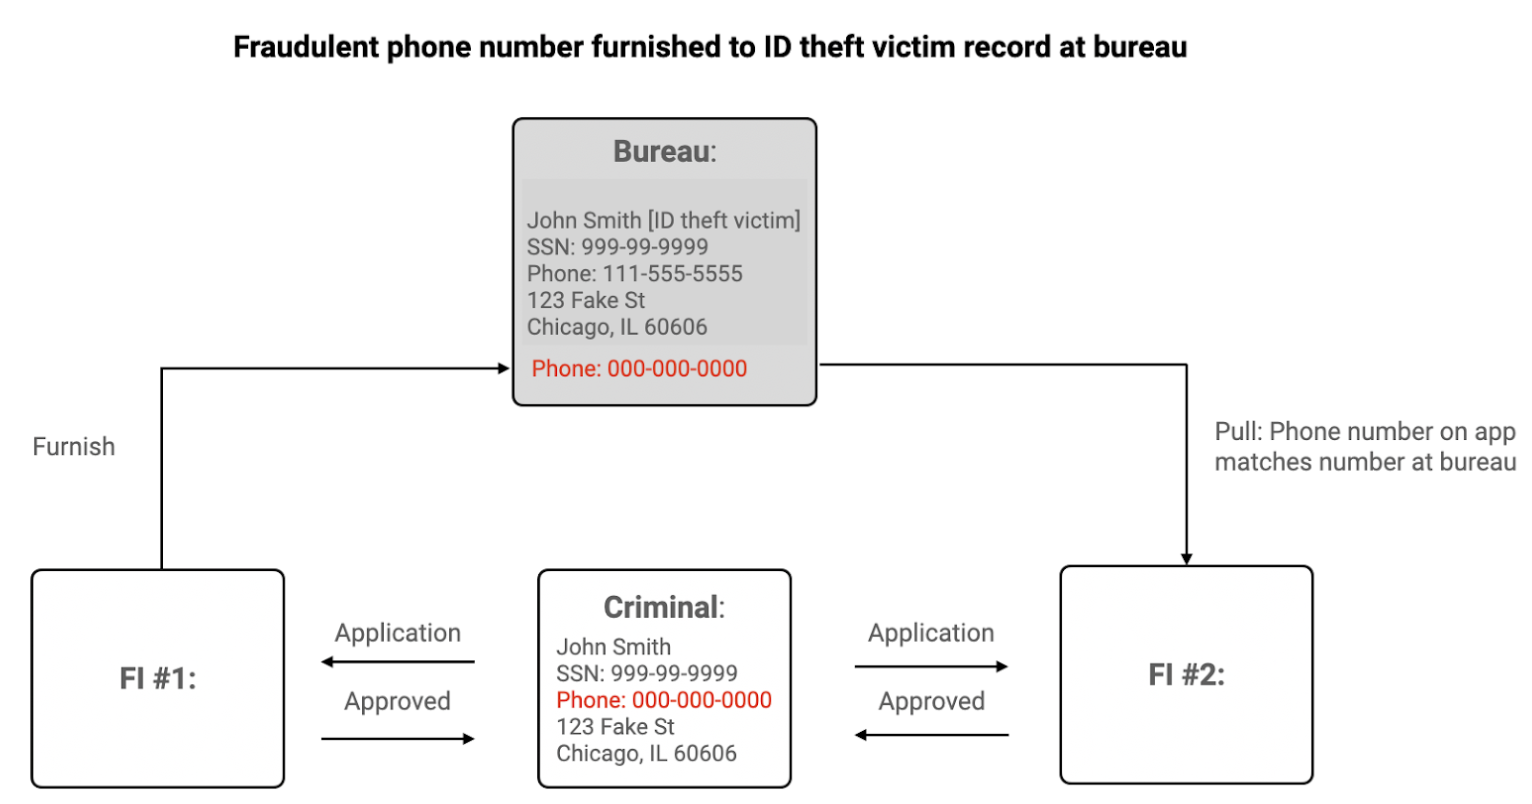 Fraudulent phone number furnished to bureau